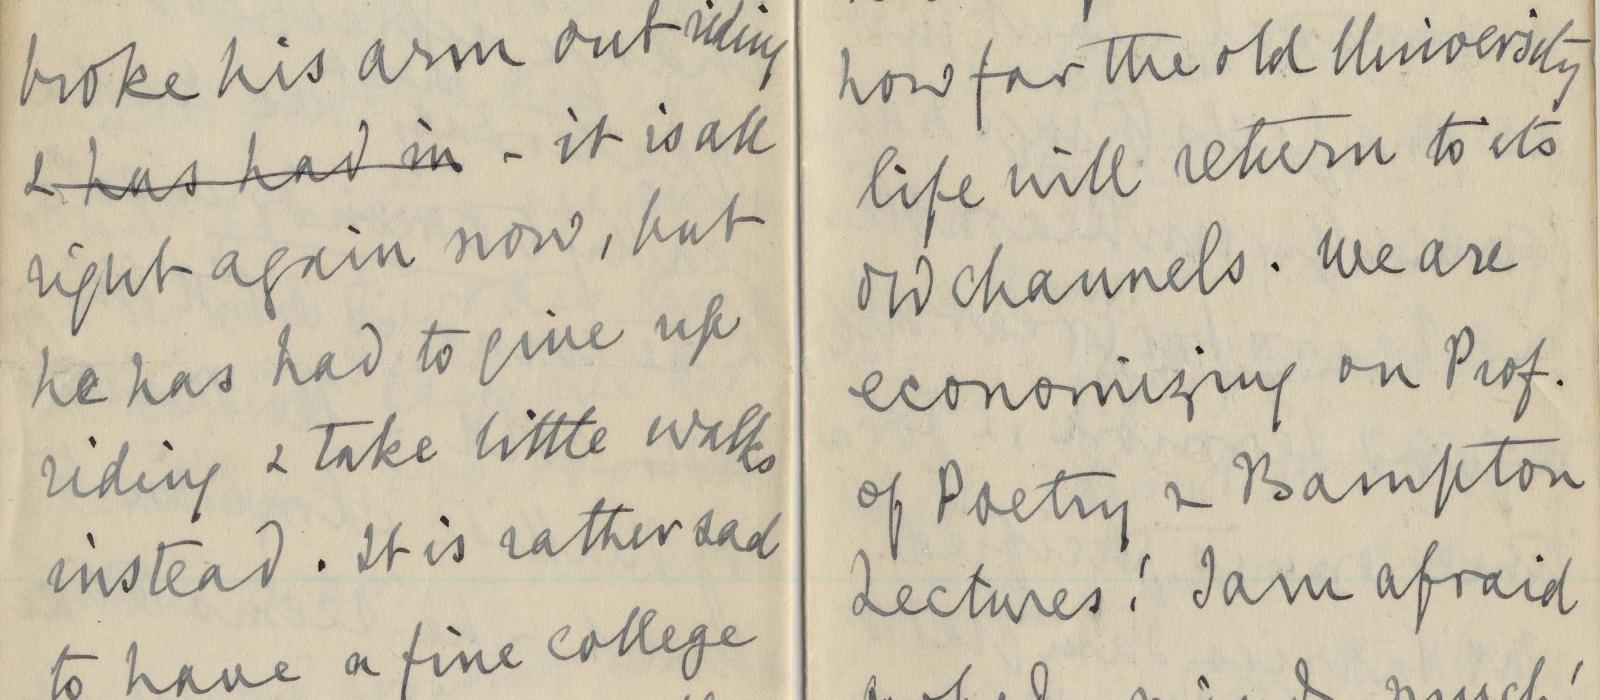 Wordsworth letter 1916